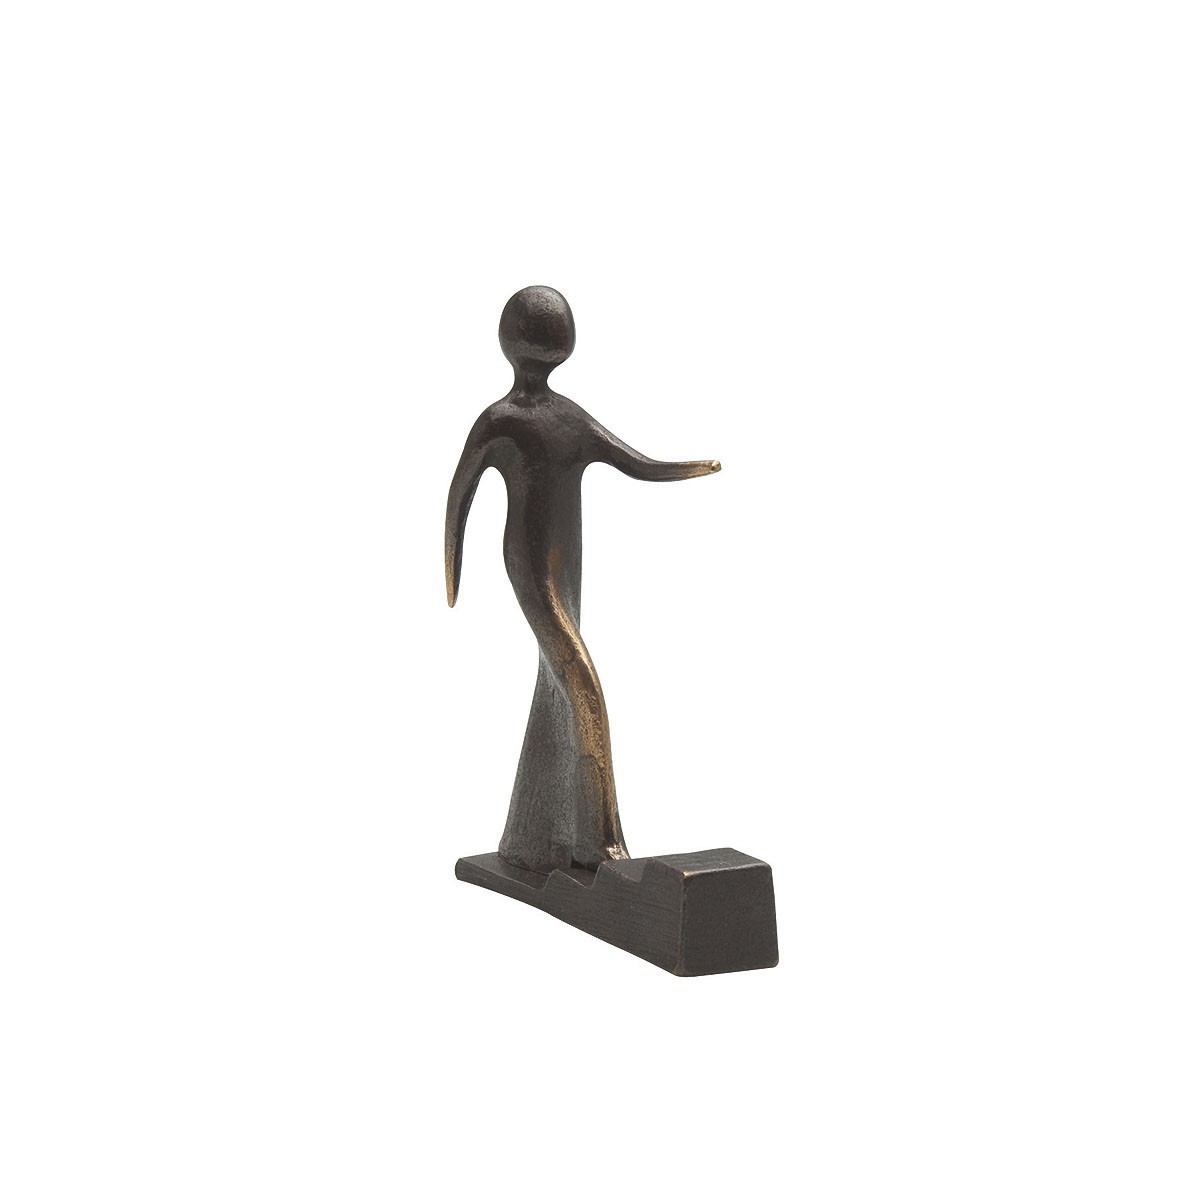 Kerstin Stark, Schritt für Schritt, 7cm (Schritt für Schritt, Skulptur, Figur, Motivation, Inspiration, vorwärts gehen, Bronze, Statuette, reduziert, modern,)